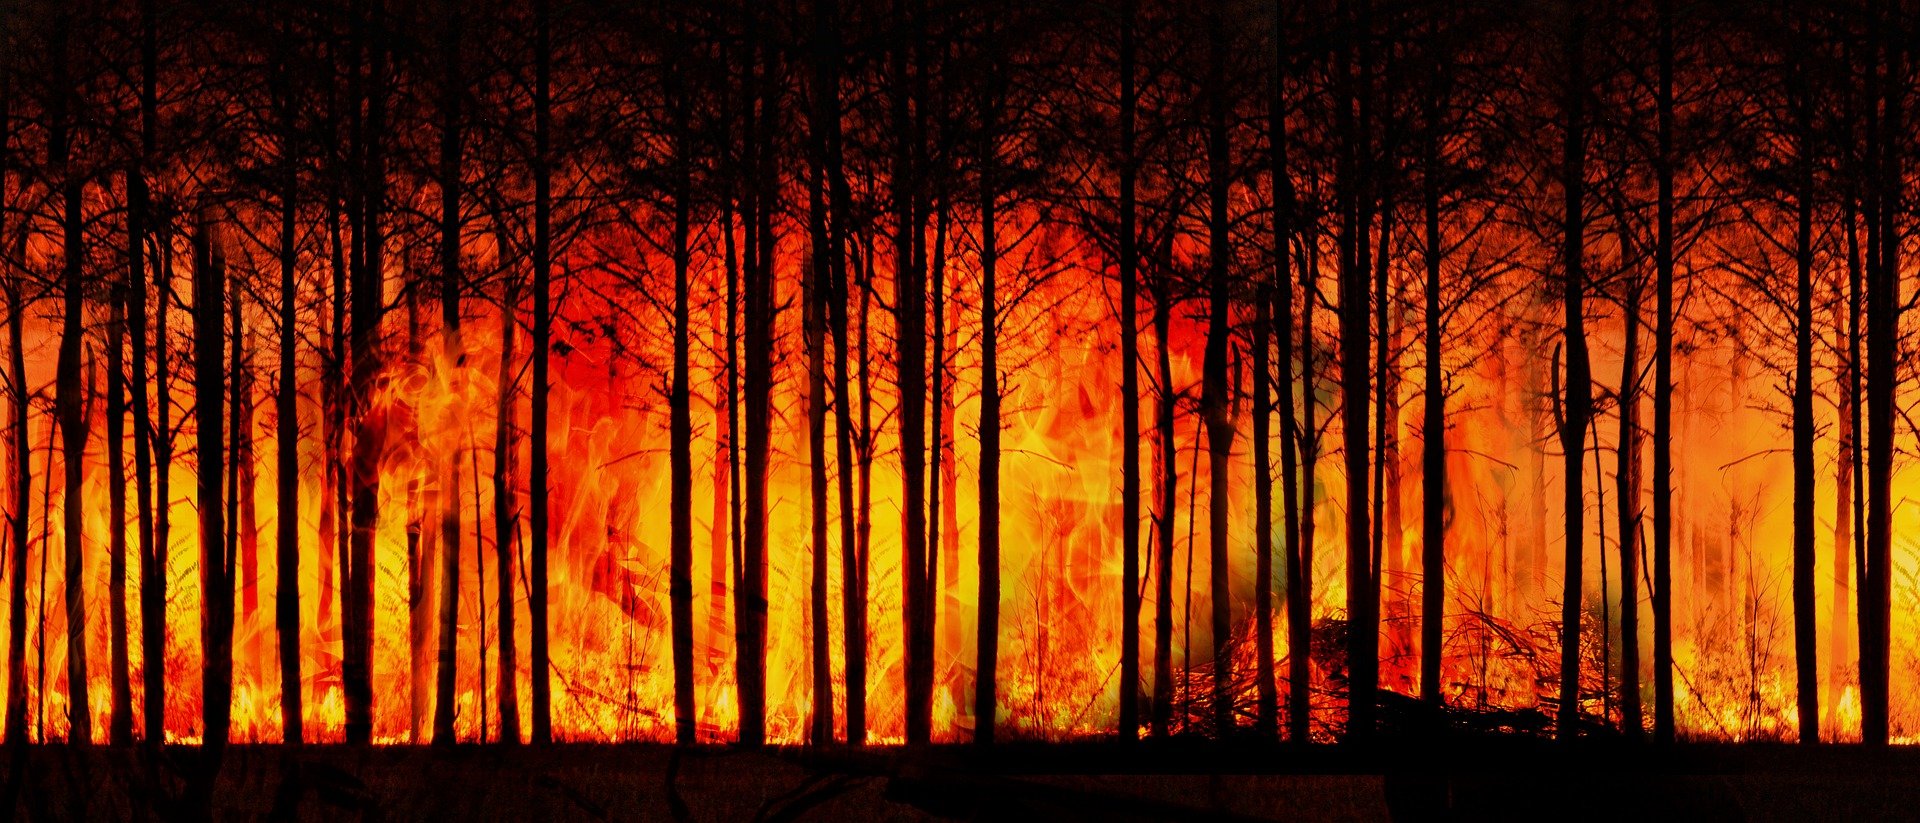 Brennender Wald - Waldbrand